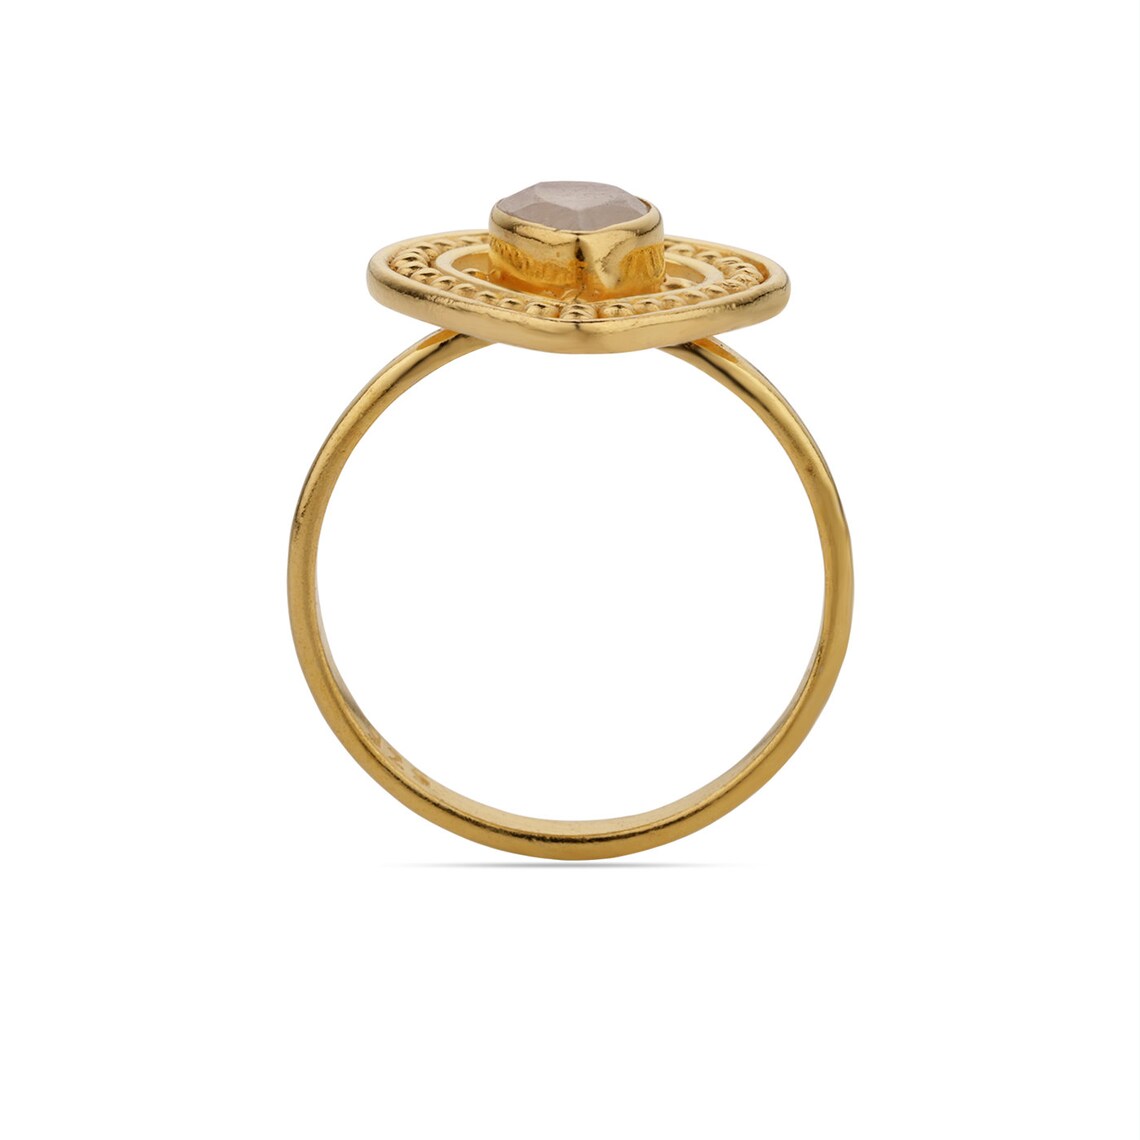 Moonstone Gold Ring, Pear Moonstone Ring ~ Birthstone Ring ~ Statement Ring - Gemstone Ring - Faceted Rainbow Moonstone Ring